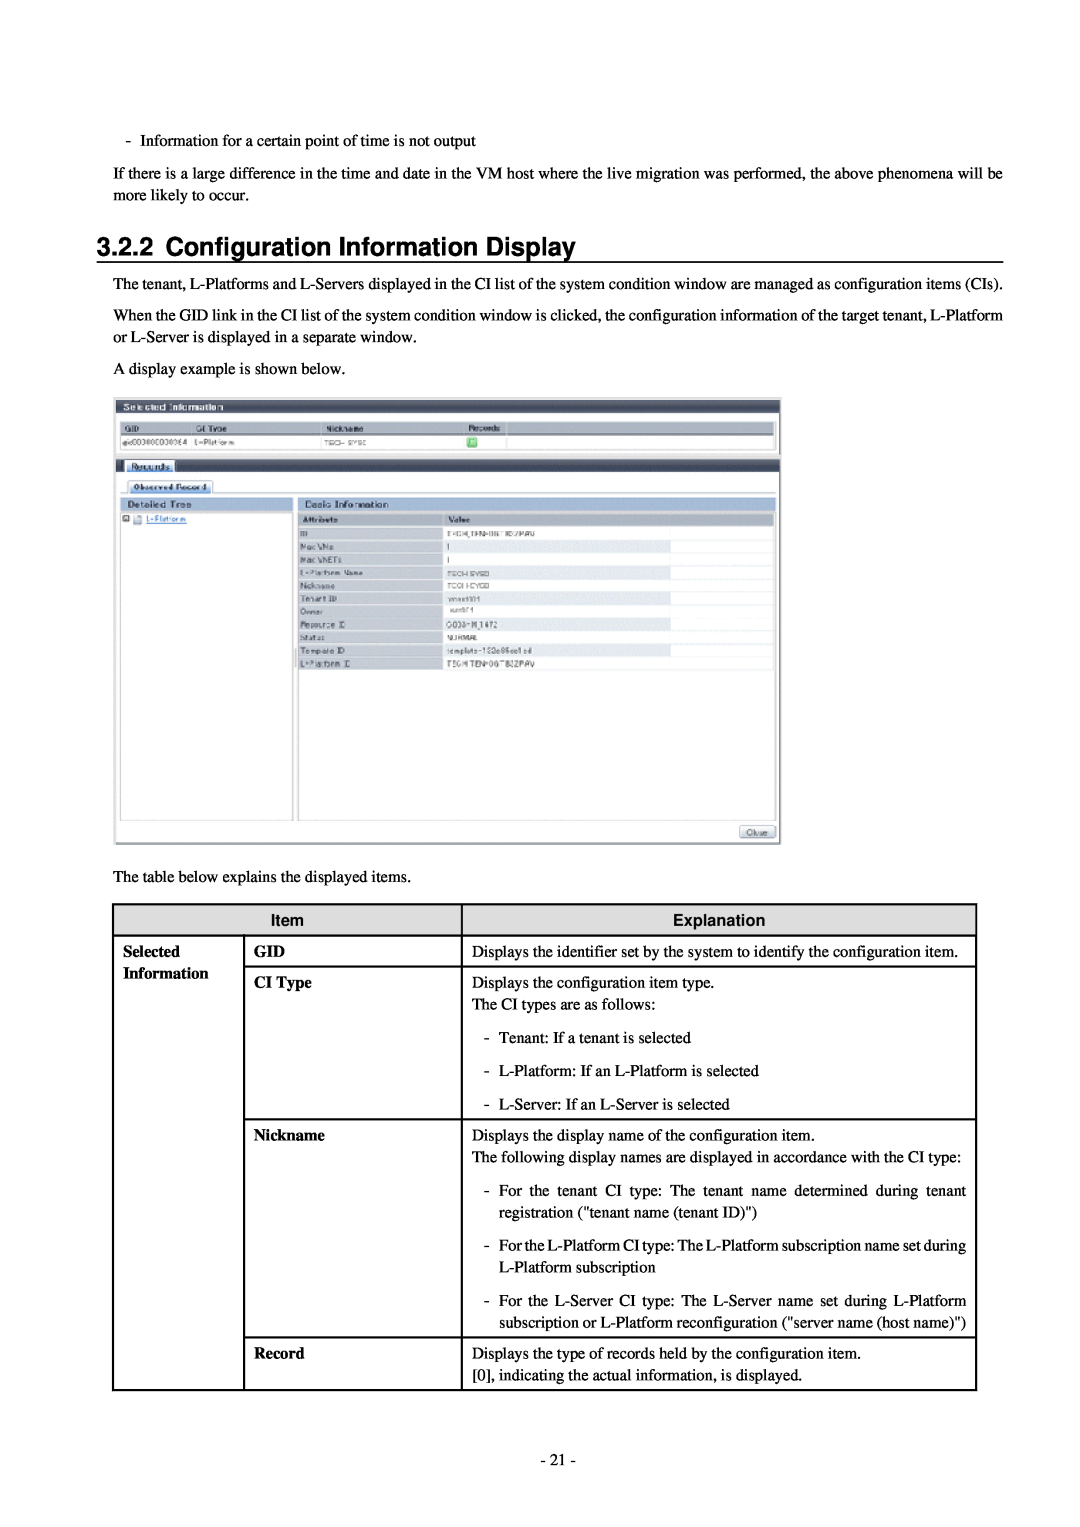 Fujitsu V3.0.0 manual Configuration Information Display, Explanation, Selected, CI Type, Nickname, Record 